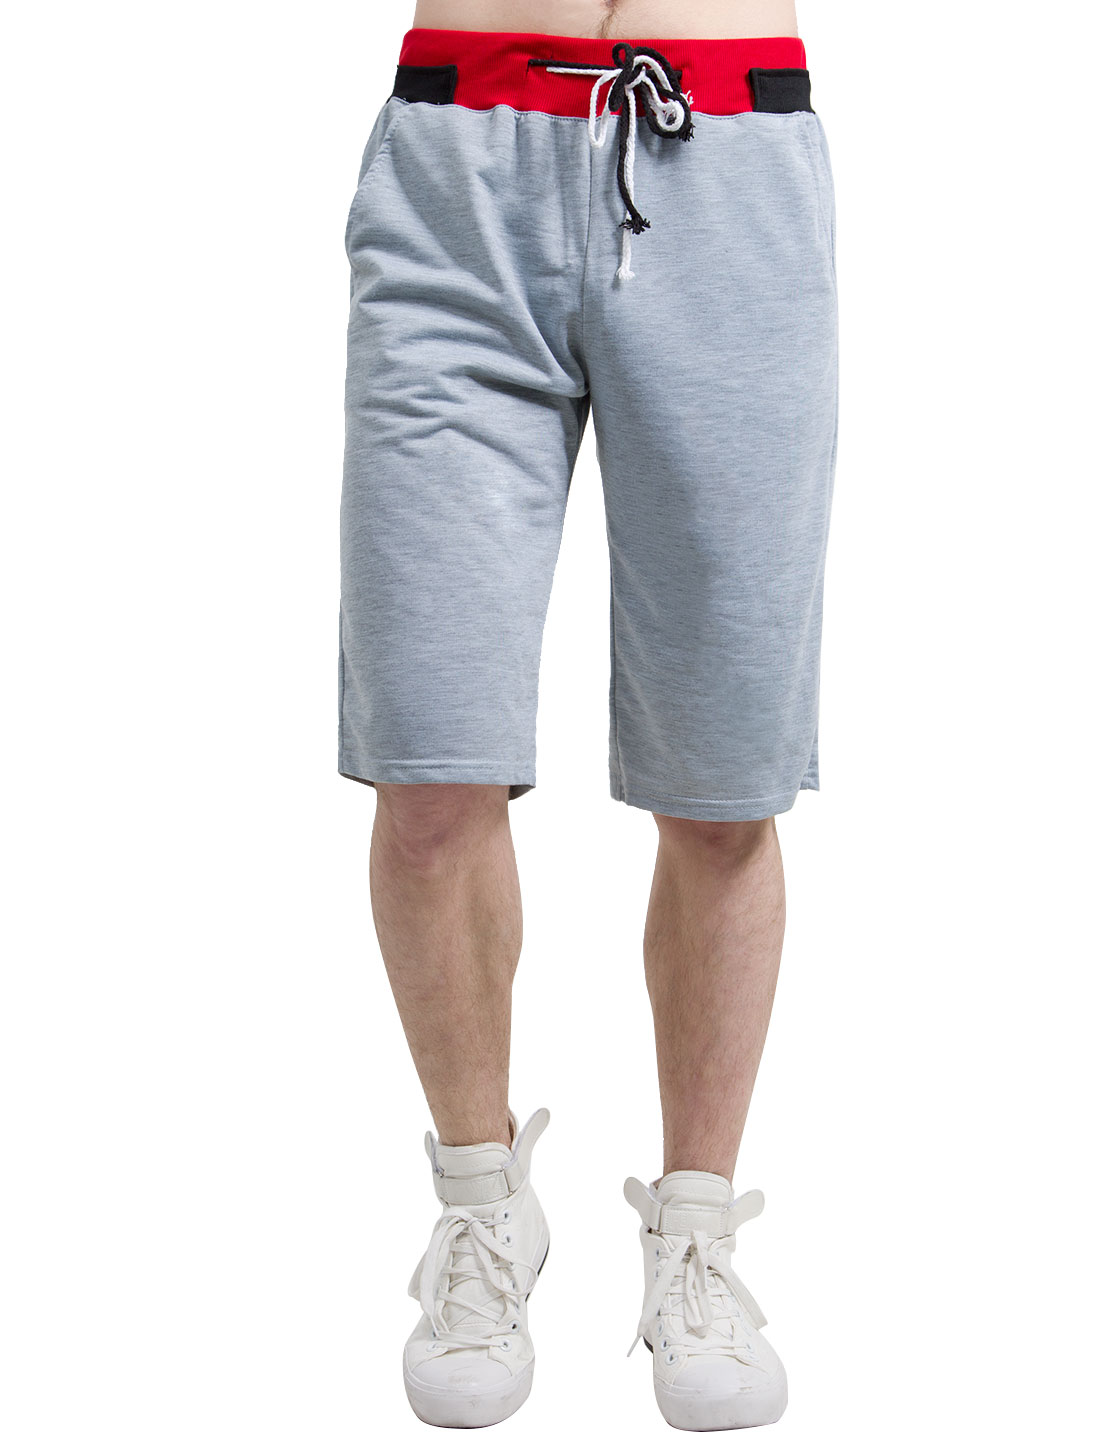 reebok men's performance mesh shorts